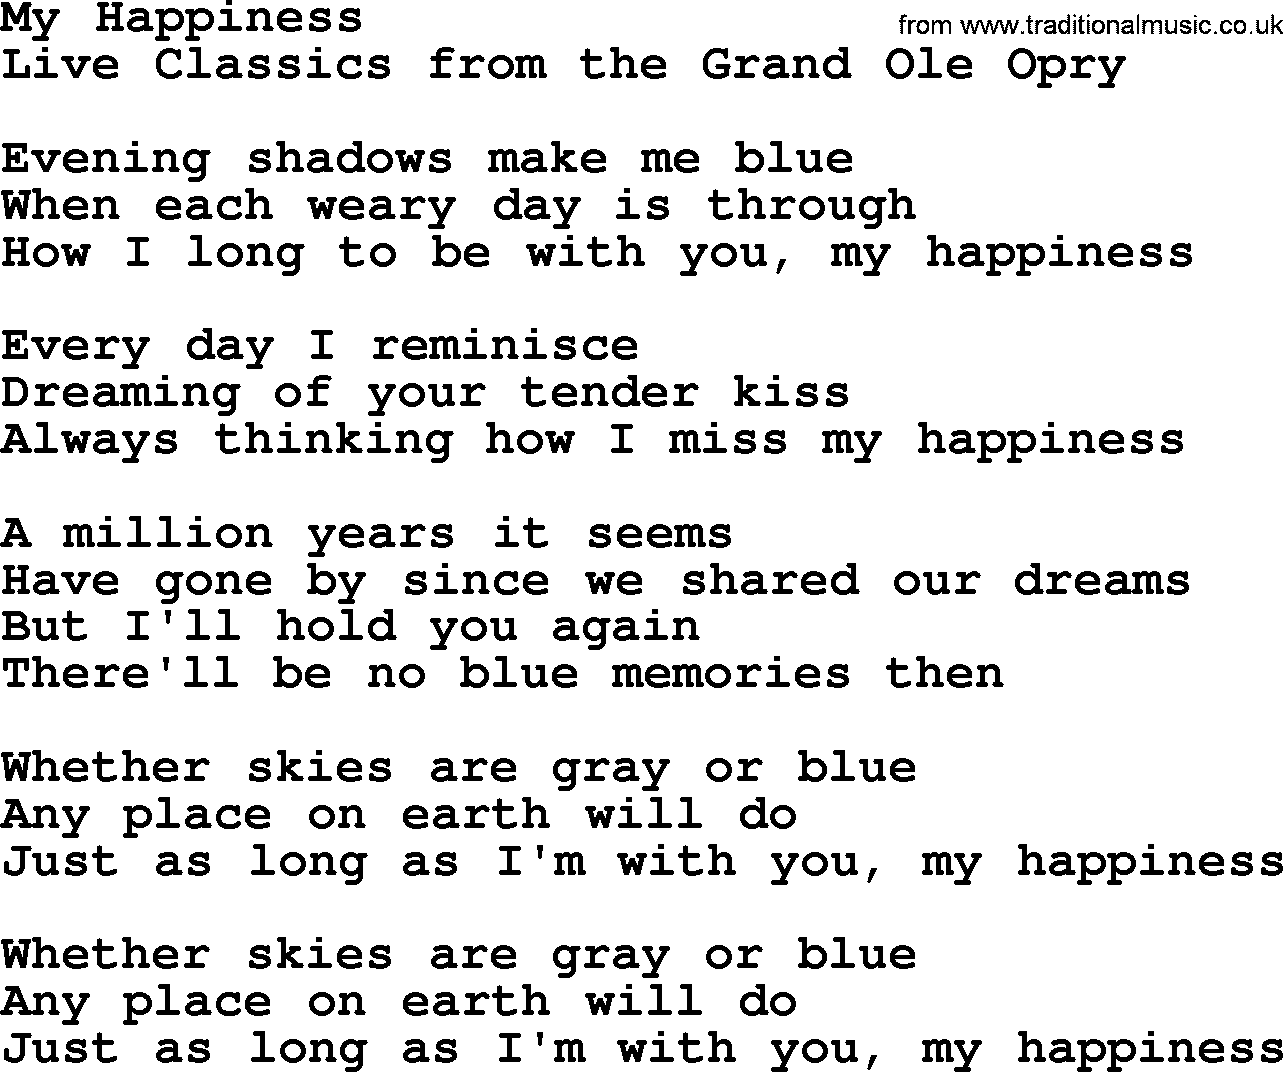 Marty Robbins song: My Happiness, lyrics